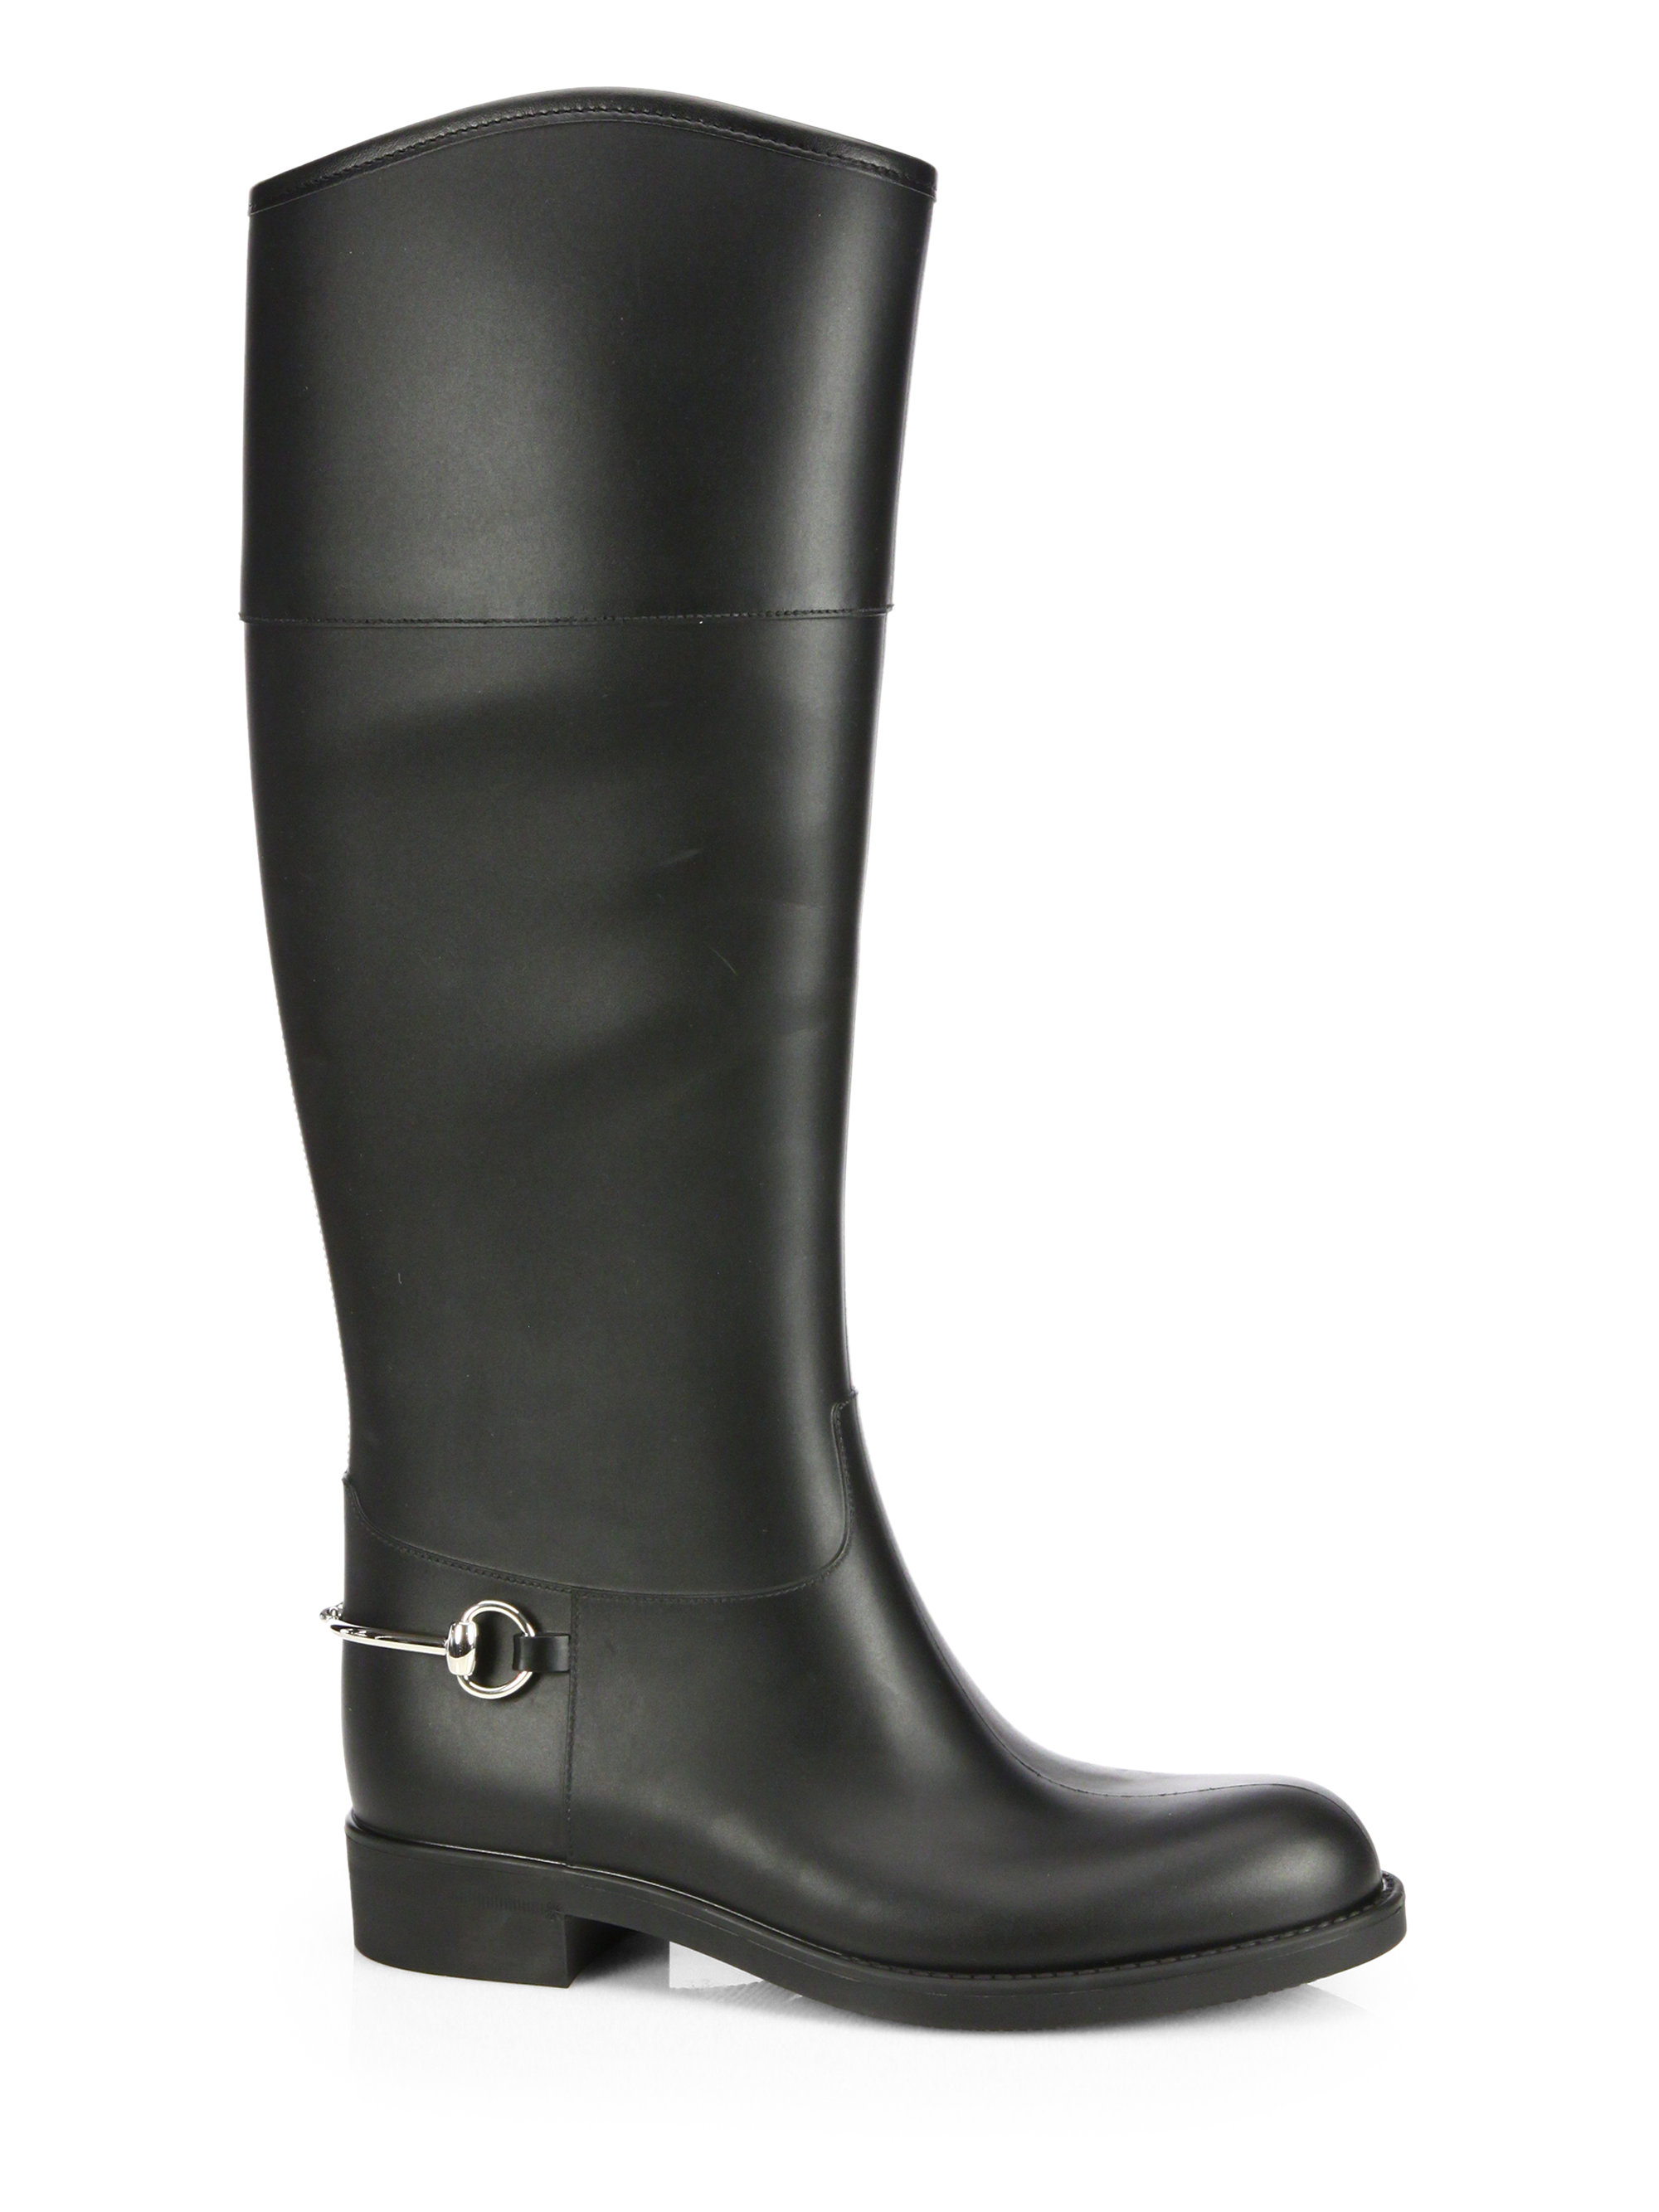 Lyst - Gucci Rubber Horsebit Rain Boots in Black